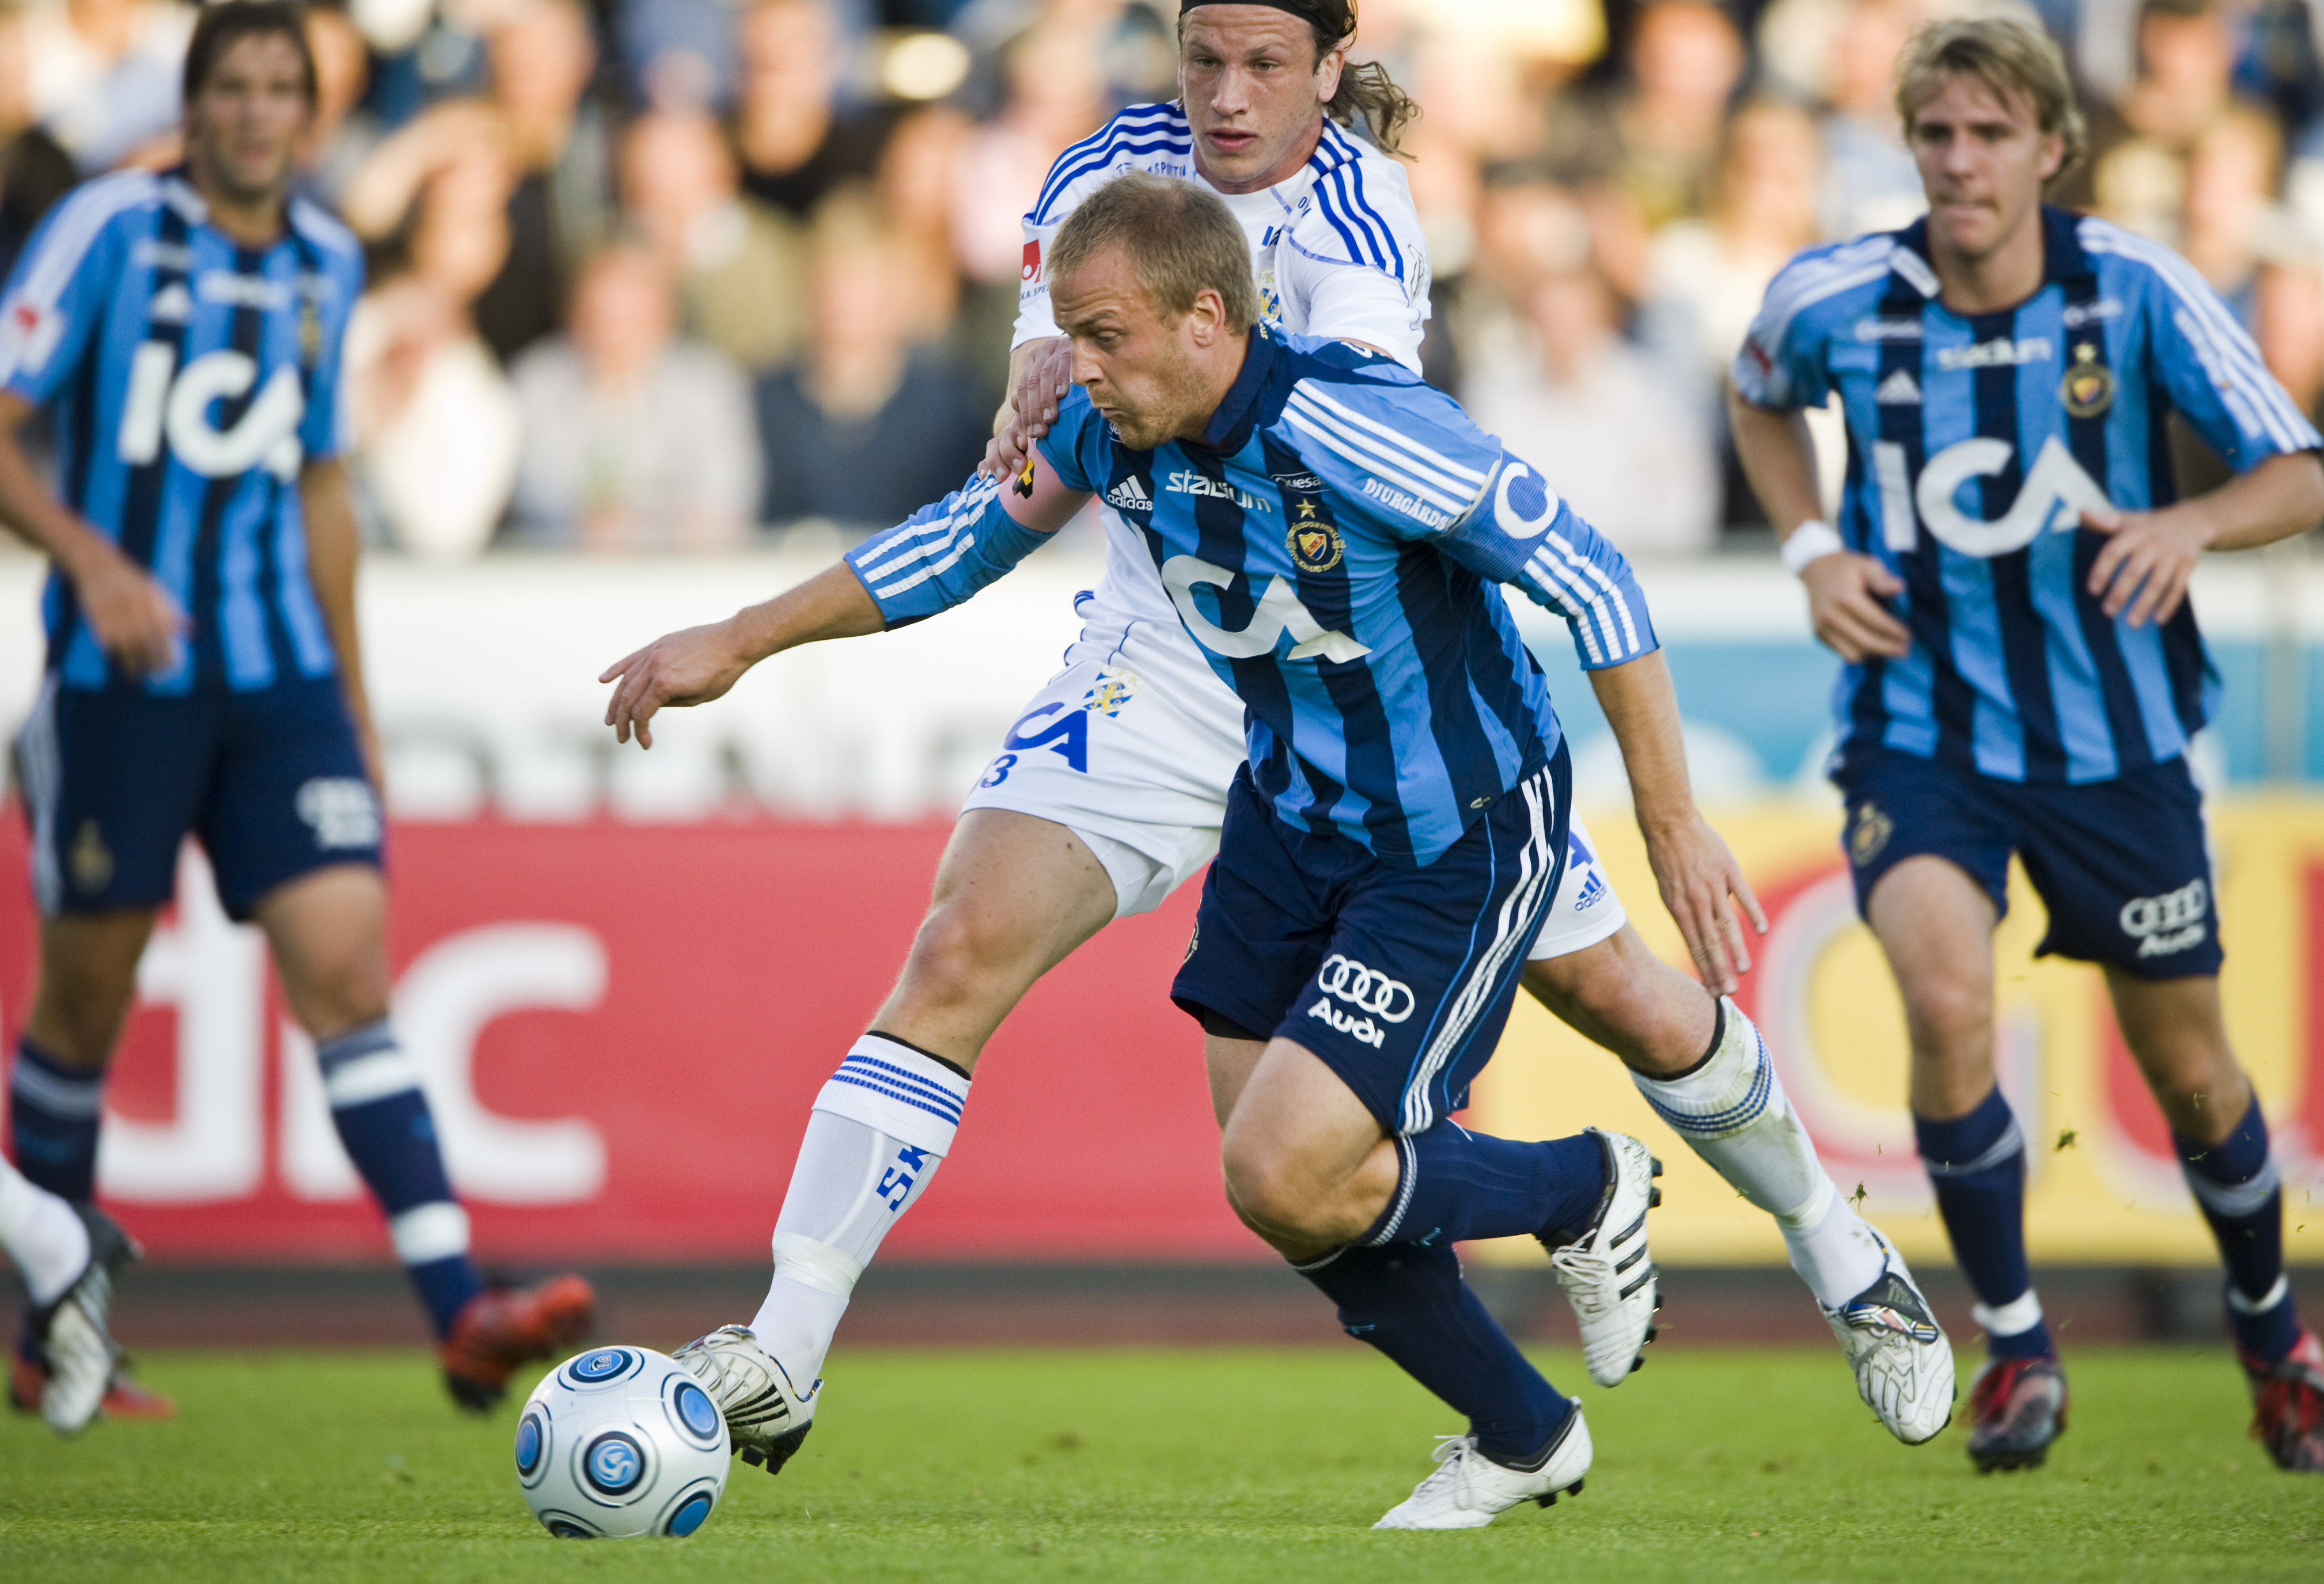 Dif, Stefan Pettersson, Allsvenskan